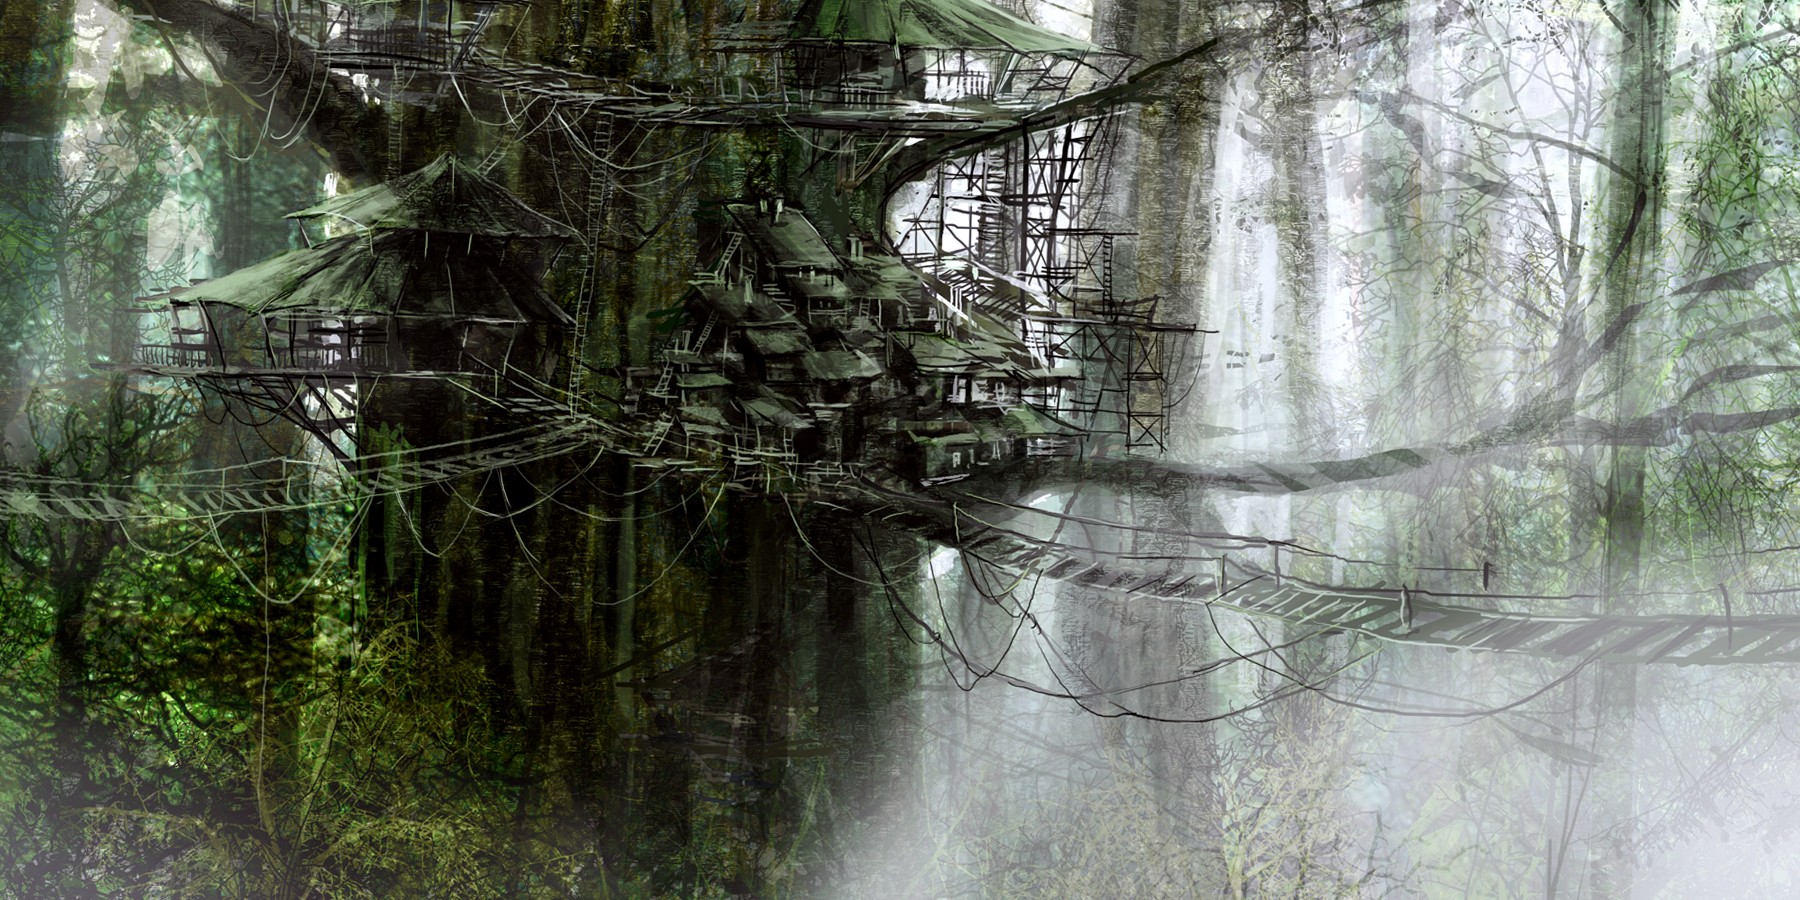 fantasy art artwork pixelated digital art house trees plants leaves ropes tree house wallpaper